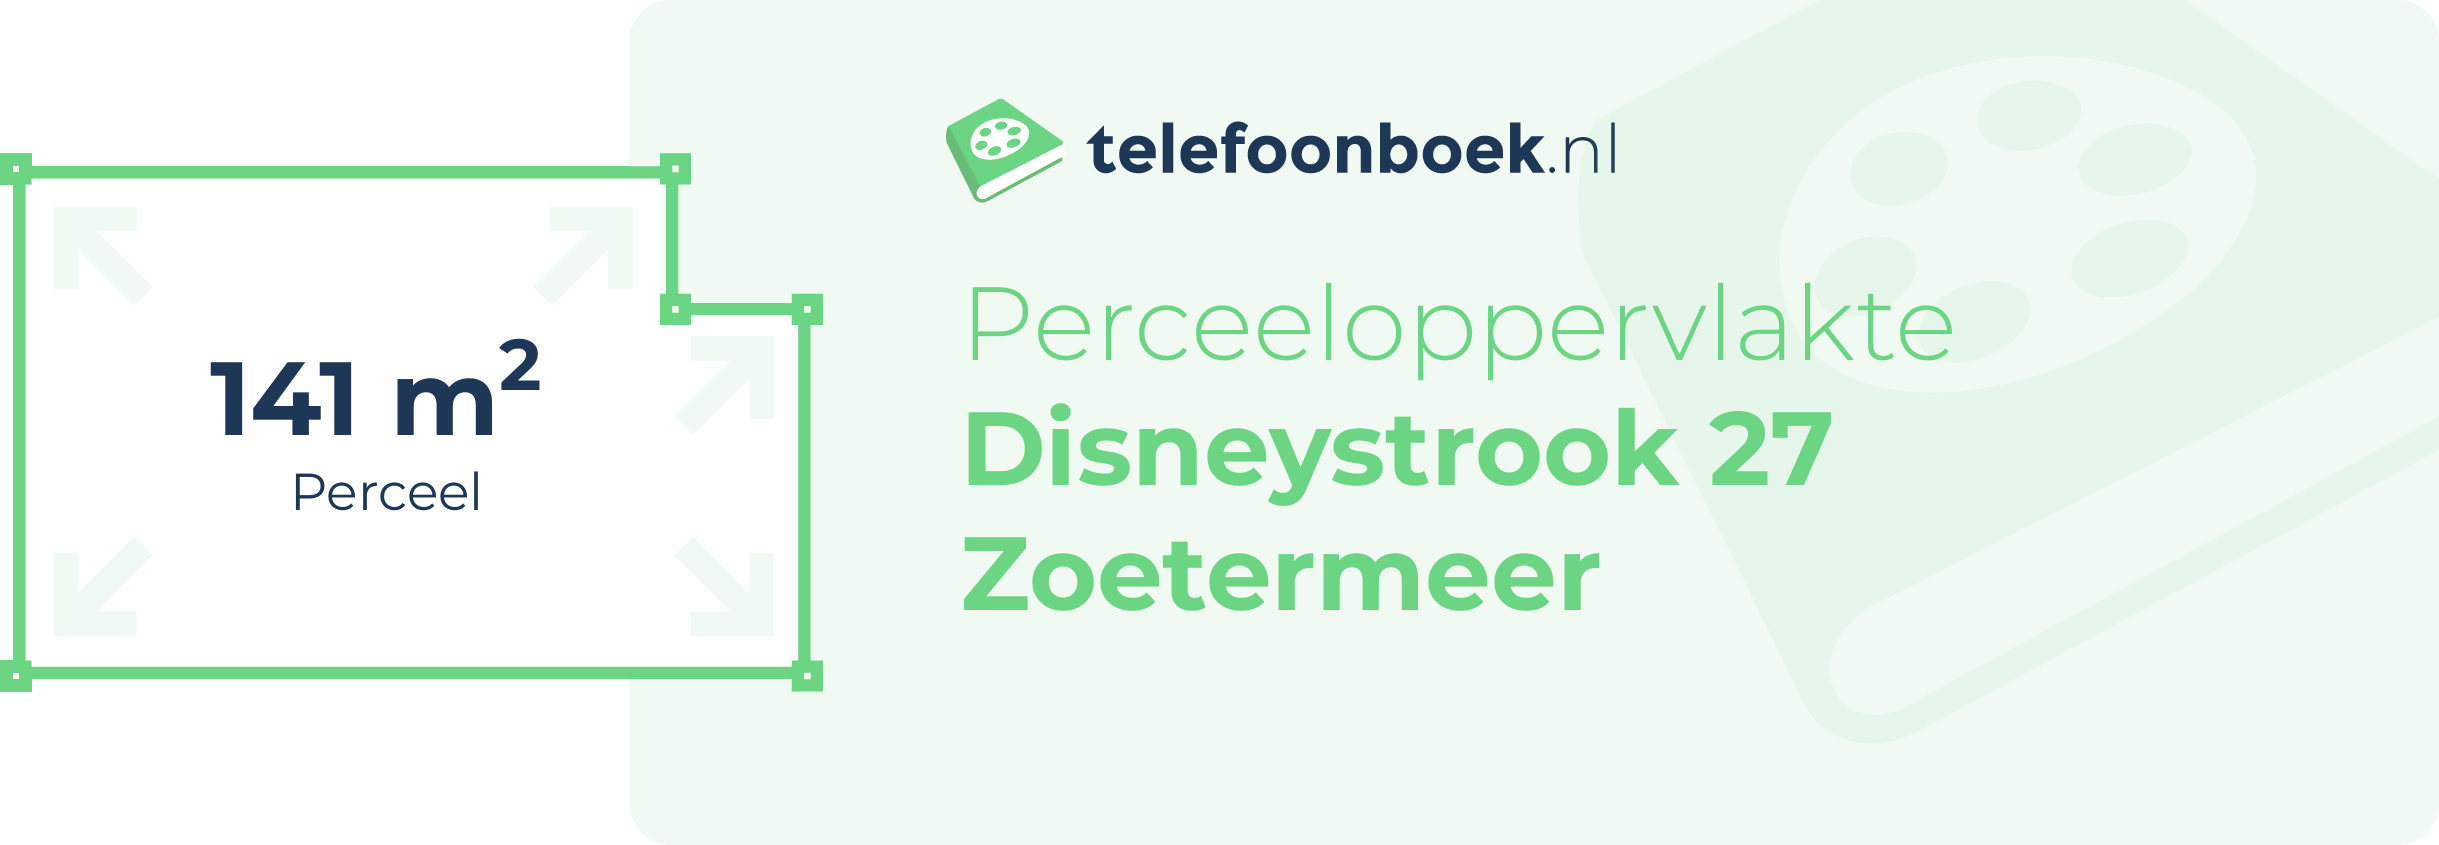 Perceeloppervlakte Disneystrook 27 Zoetermeer